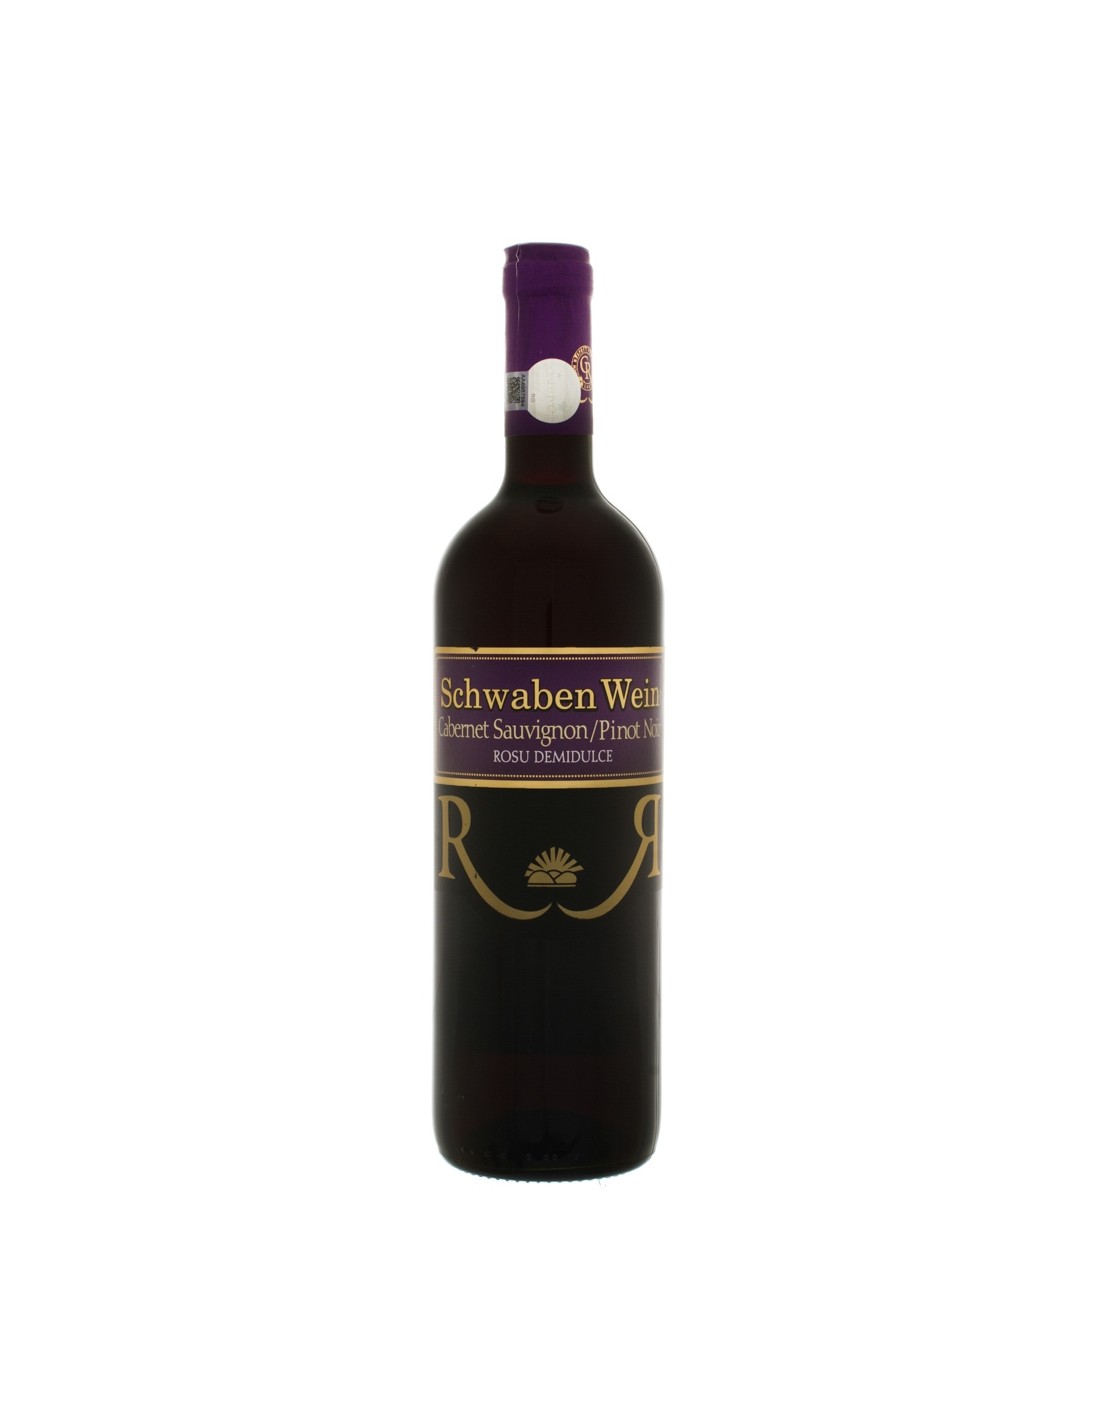 Vin rosu demidulce, Schwaben Wein Recas, 0.75L, 12.5% alc., Romania alcooldiscount.ro